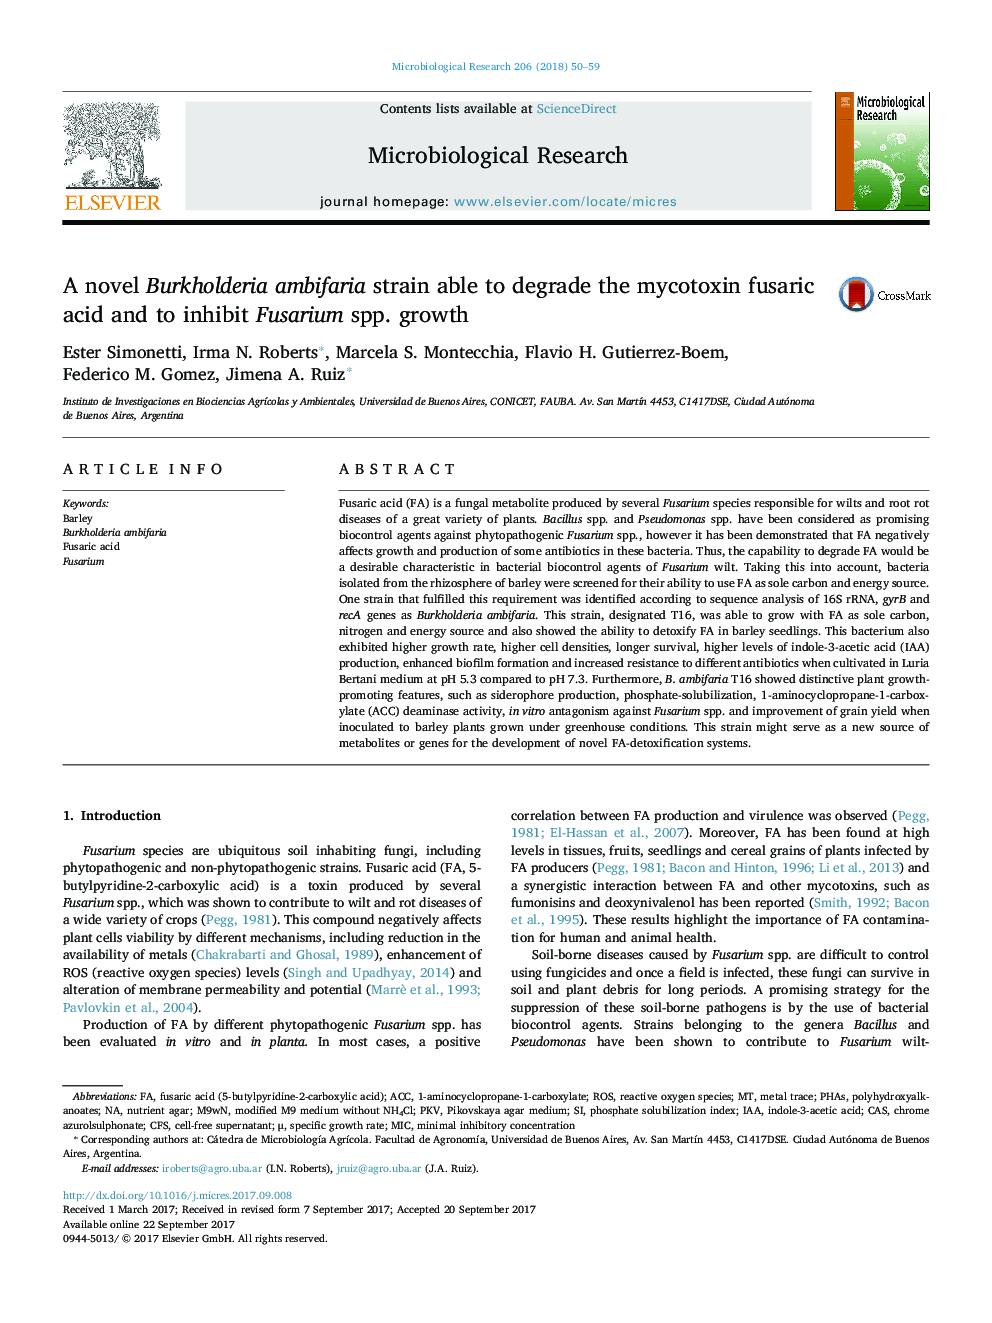 A novel Burkholderia ambifaria strain able to degrade the mycotoxin fusaric acid and to inhibit Fusarium spp. growth